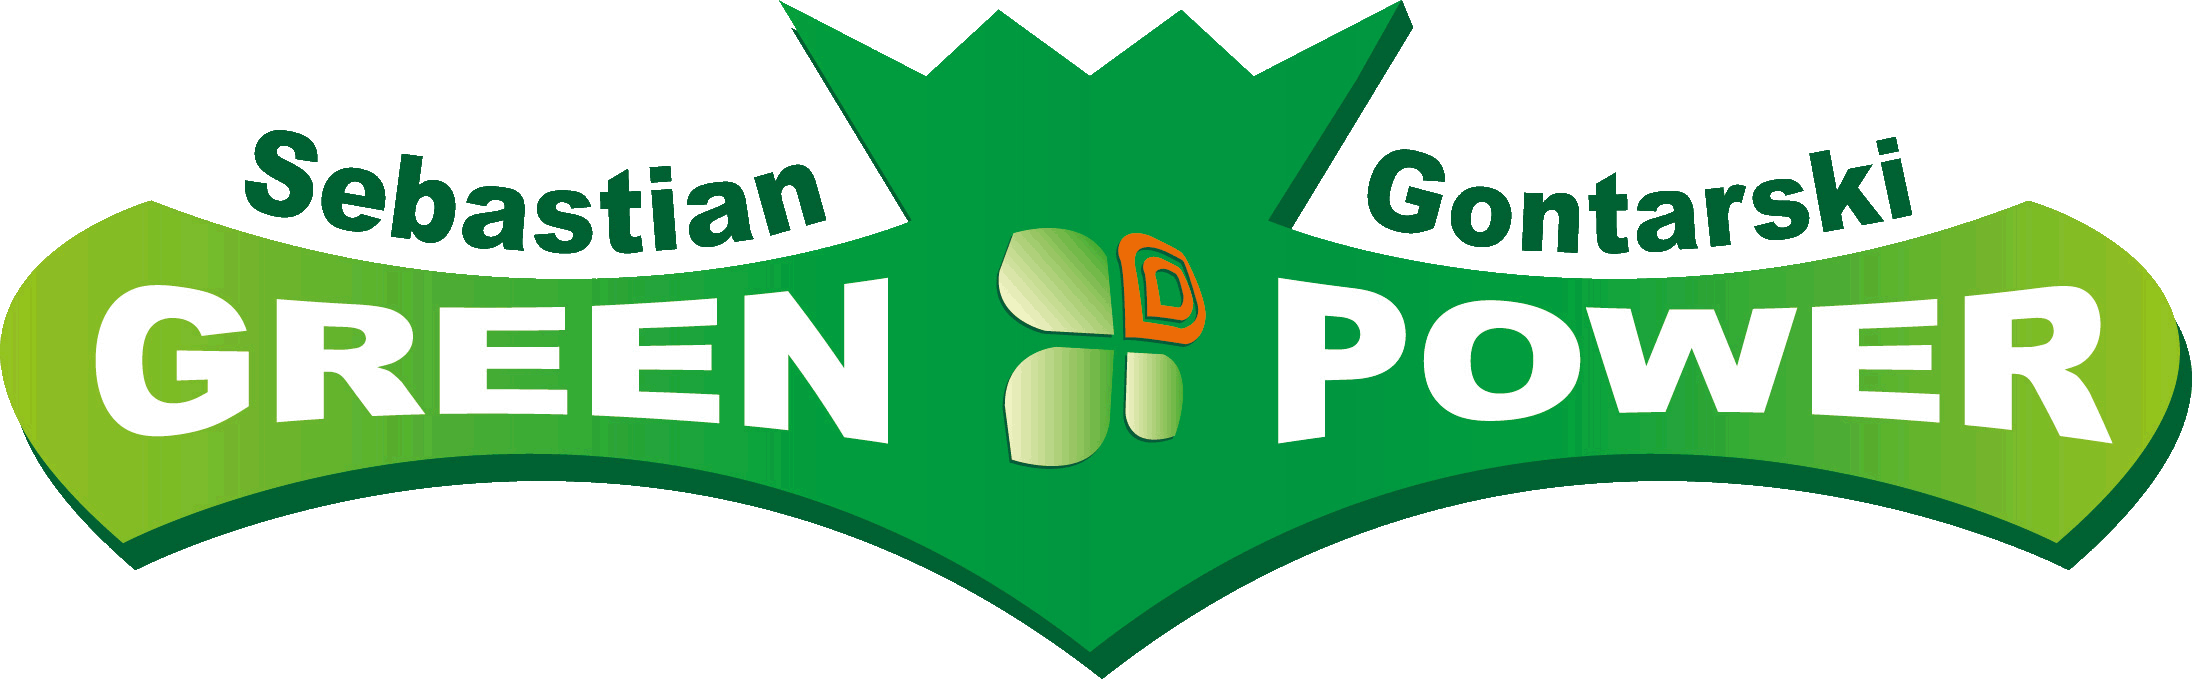 Logo firmy Green Power Sebastian Gontarski